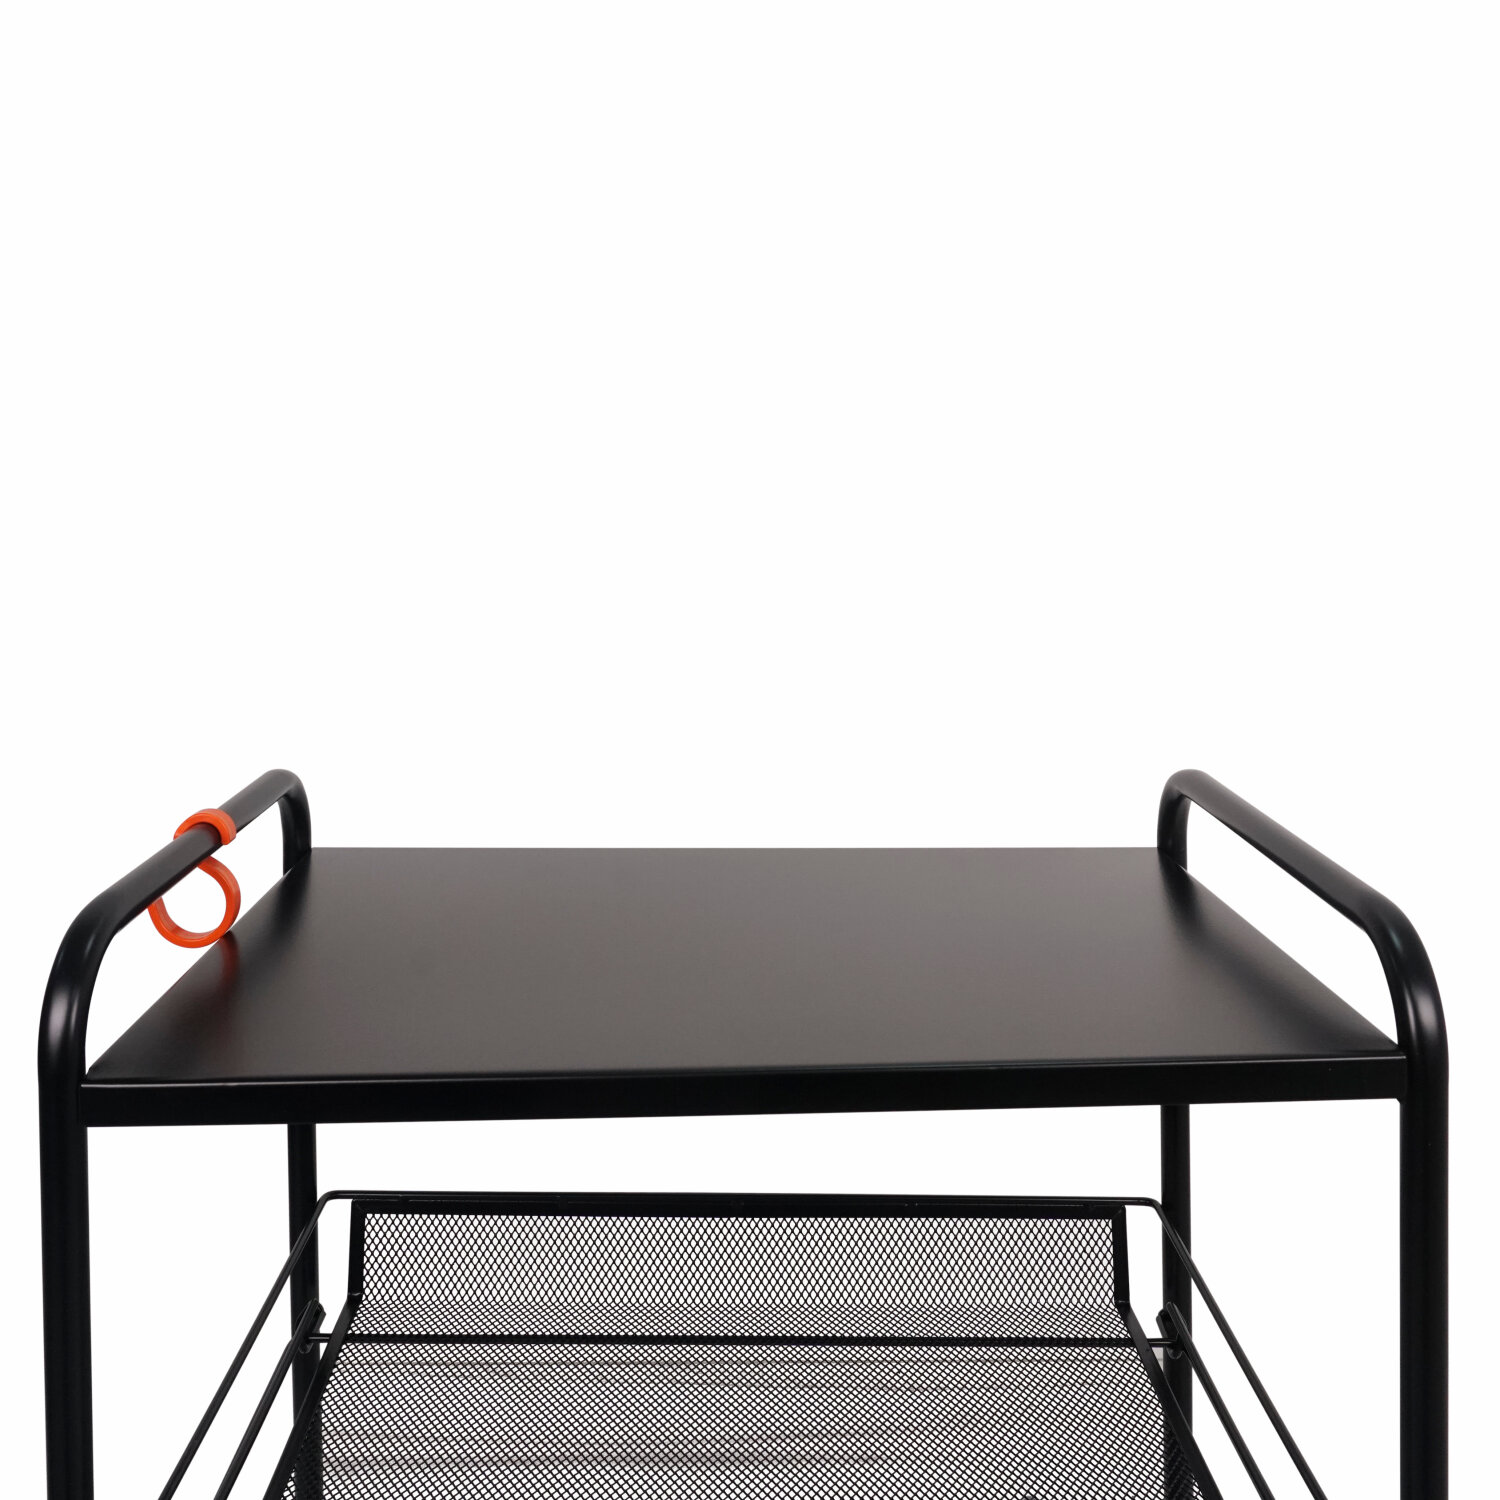 Этажерка "Ладья-34КС" офисно-бытовая 3 яруса+столик, металл, черная, 44,5х30х84 см, Э357Ч